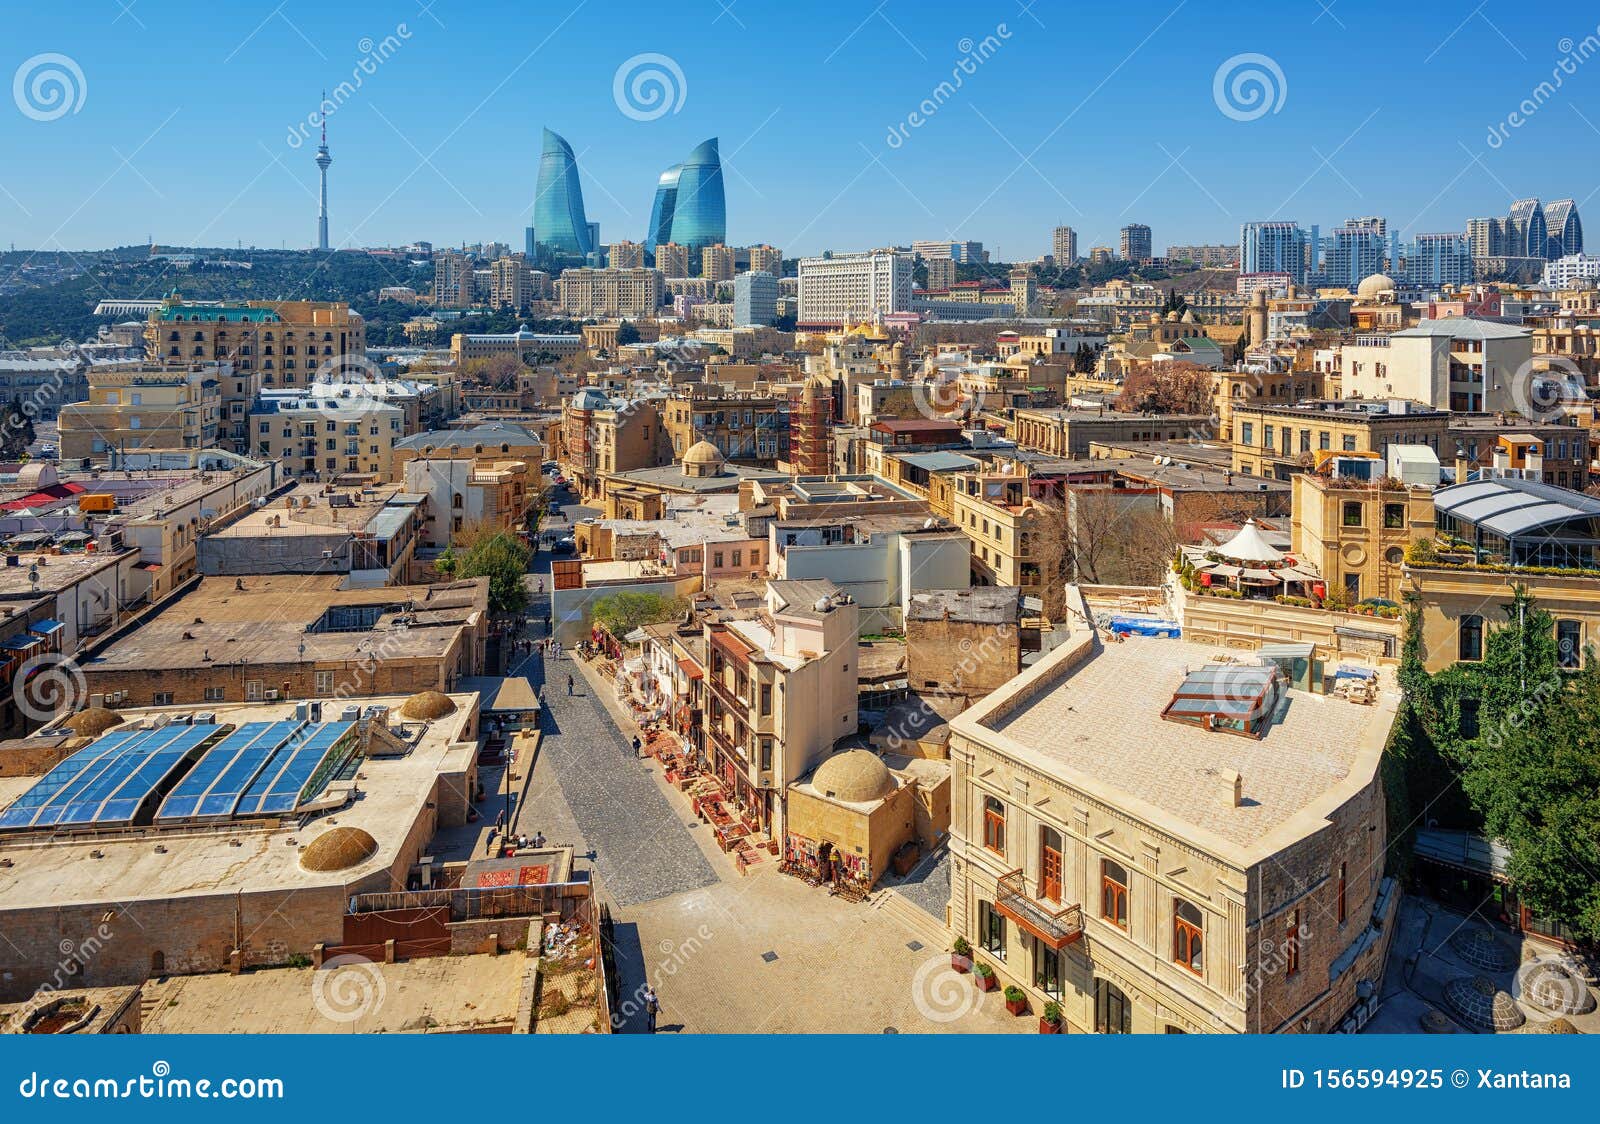 baku city, the old town and modern skyline, azerbaijan